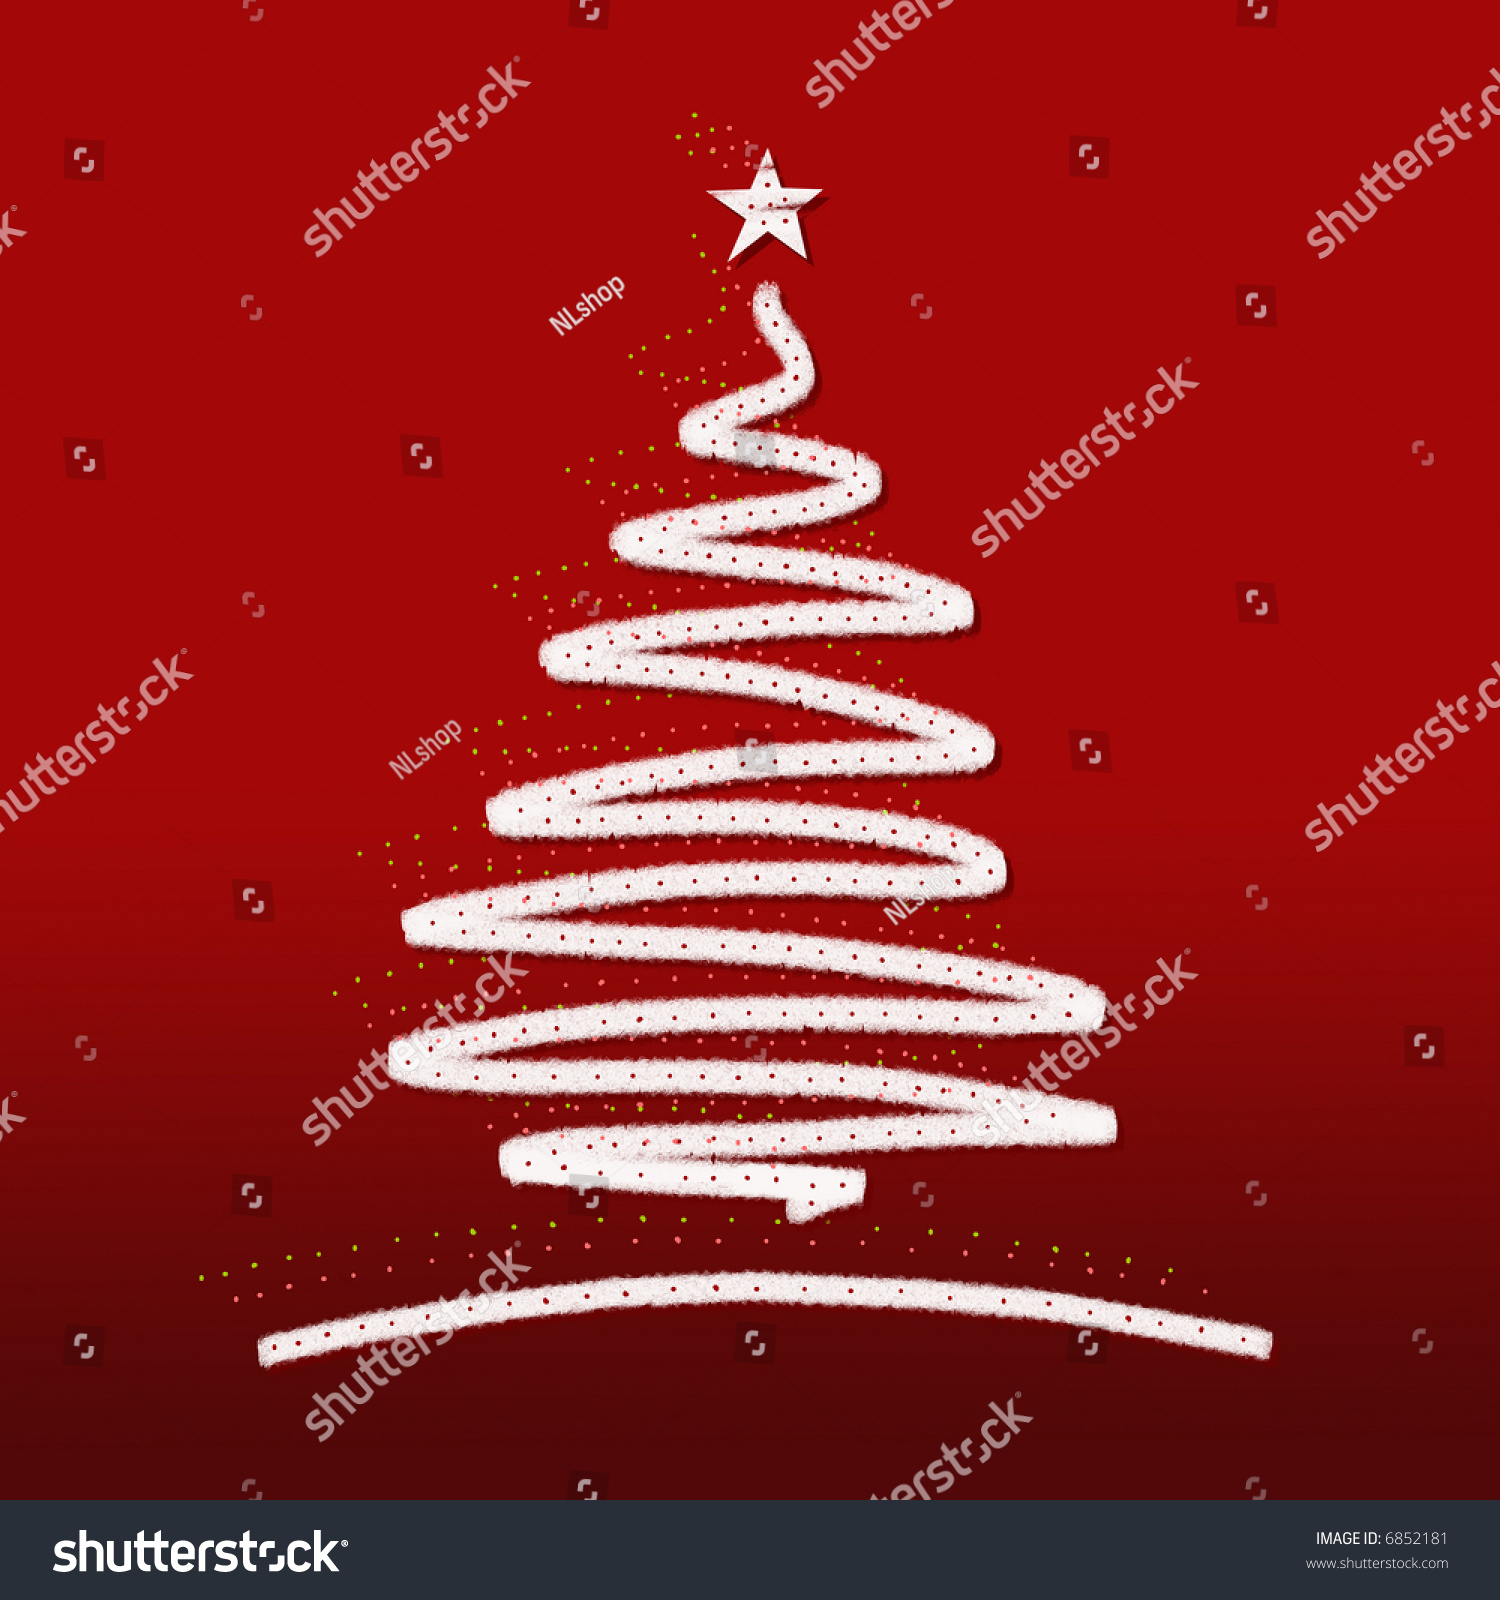 Christmas Tree Stock Illustration 6852181 | Shutterstock